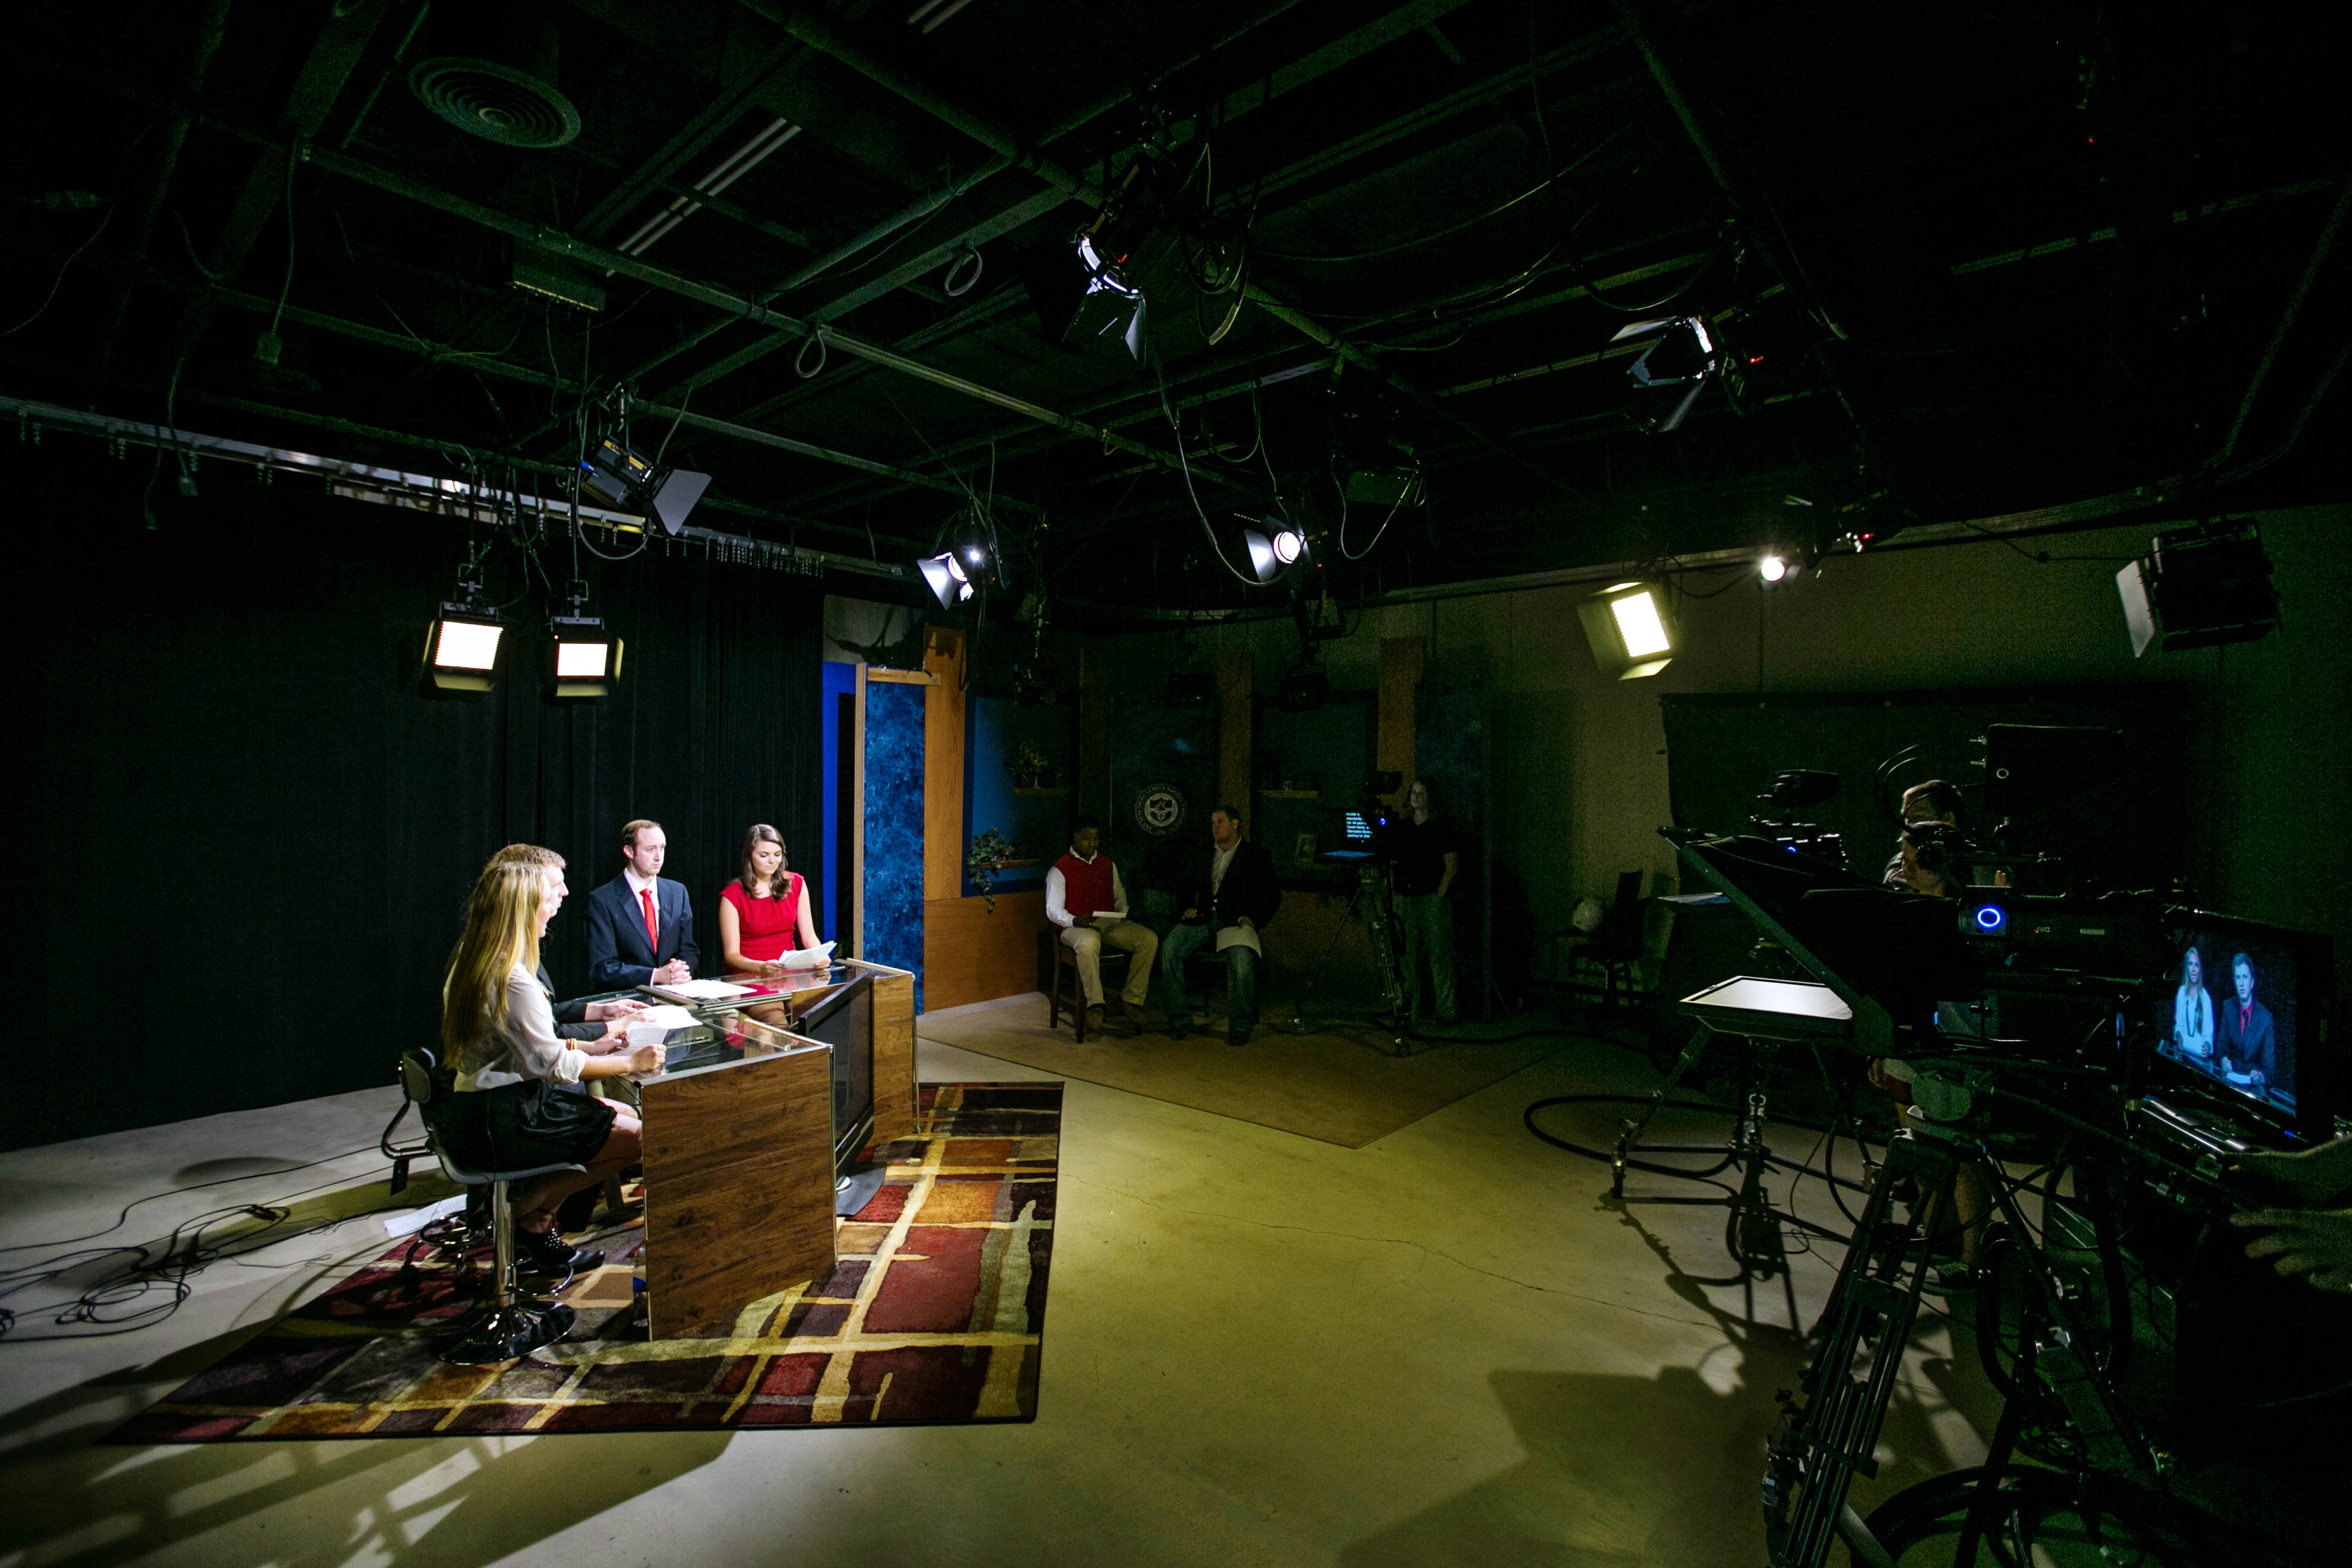 broadcast students in the studio